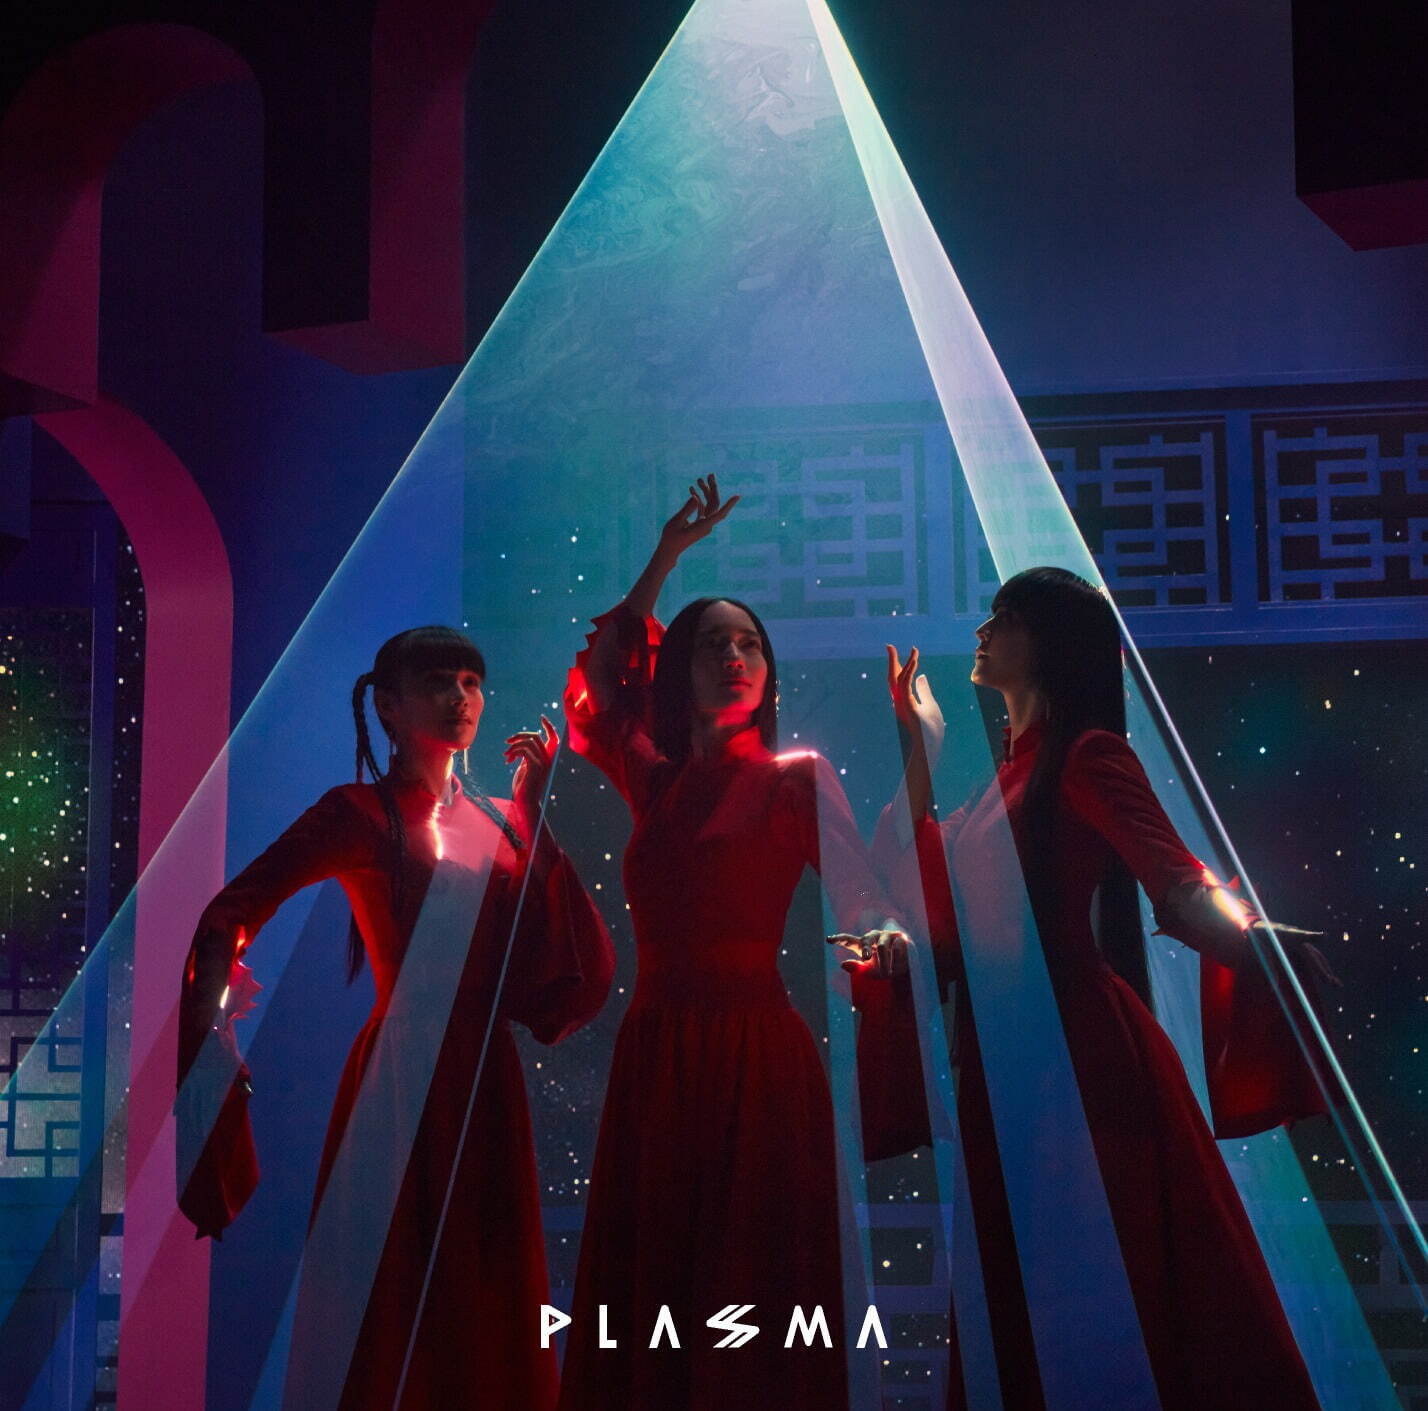 Perfume 最新アルバム『PLASMA』通常盤 3,300円